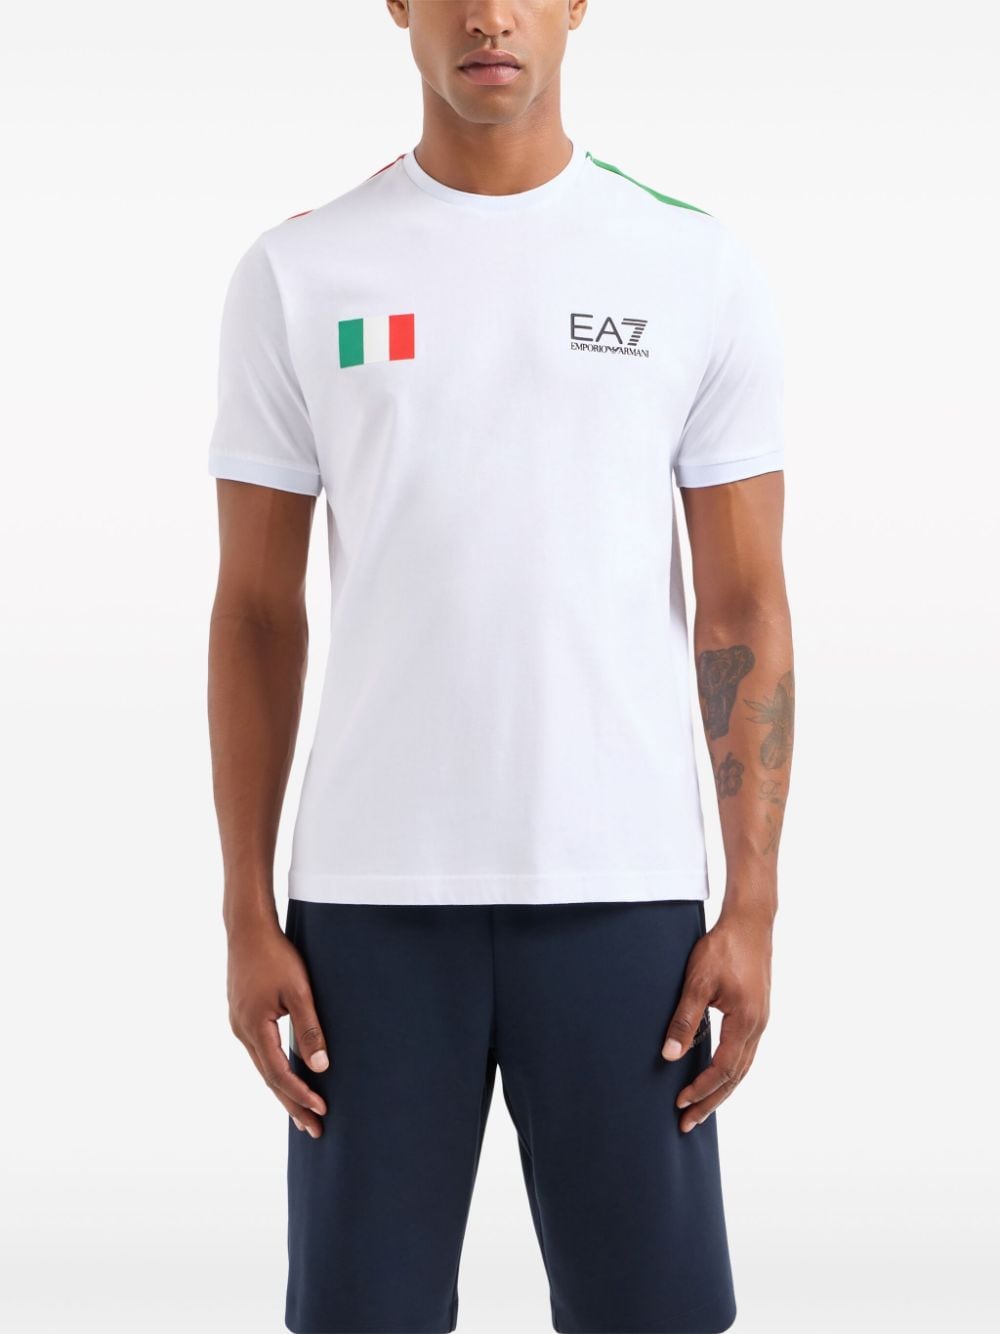 Ea7 Emporio Armani Katoenen T-shirt met vlagprint - Wit